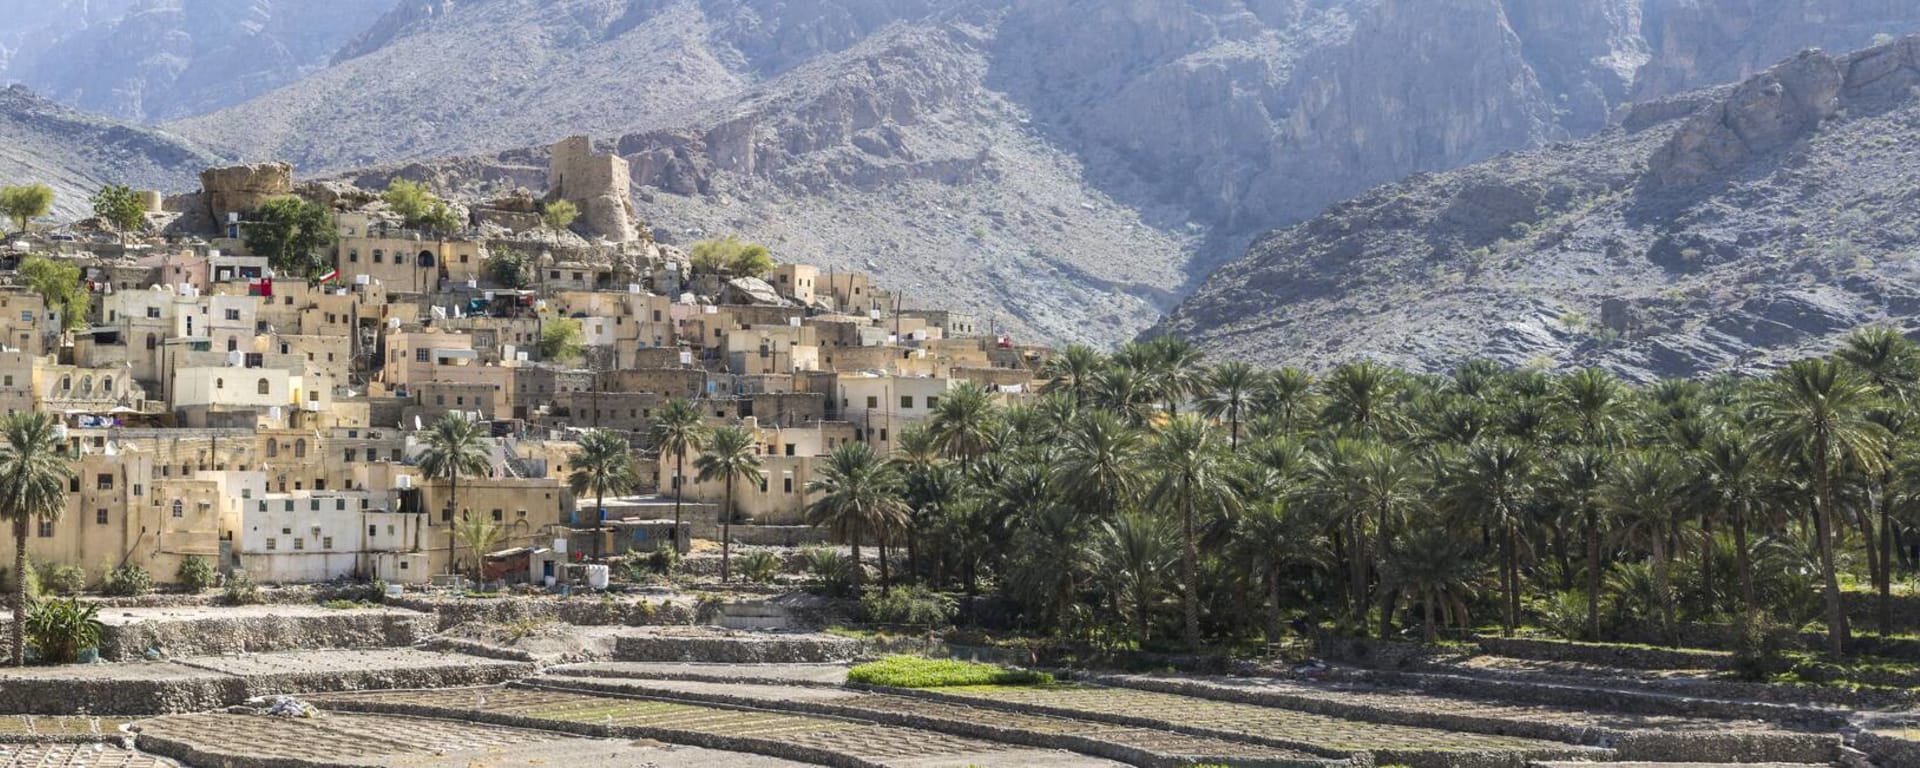 Bergdorf Billad Sayt, EN, privat in Muscat: Oman Bilad Sayt